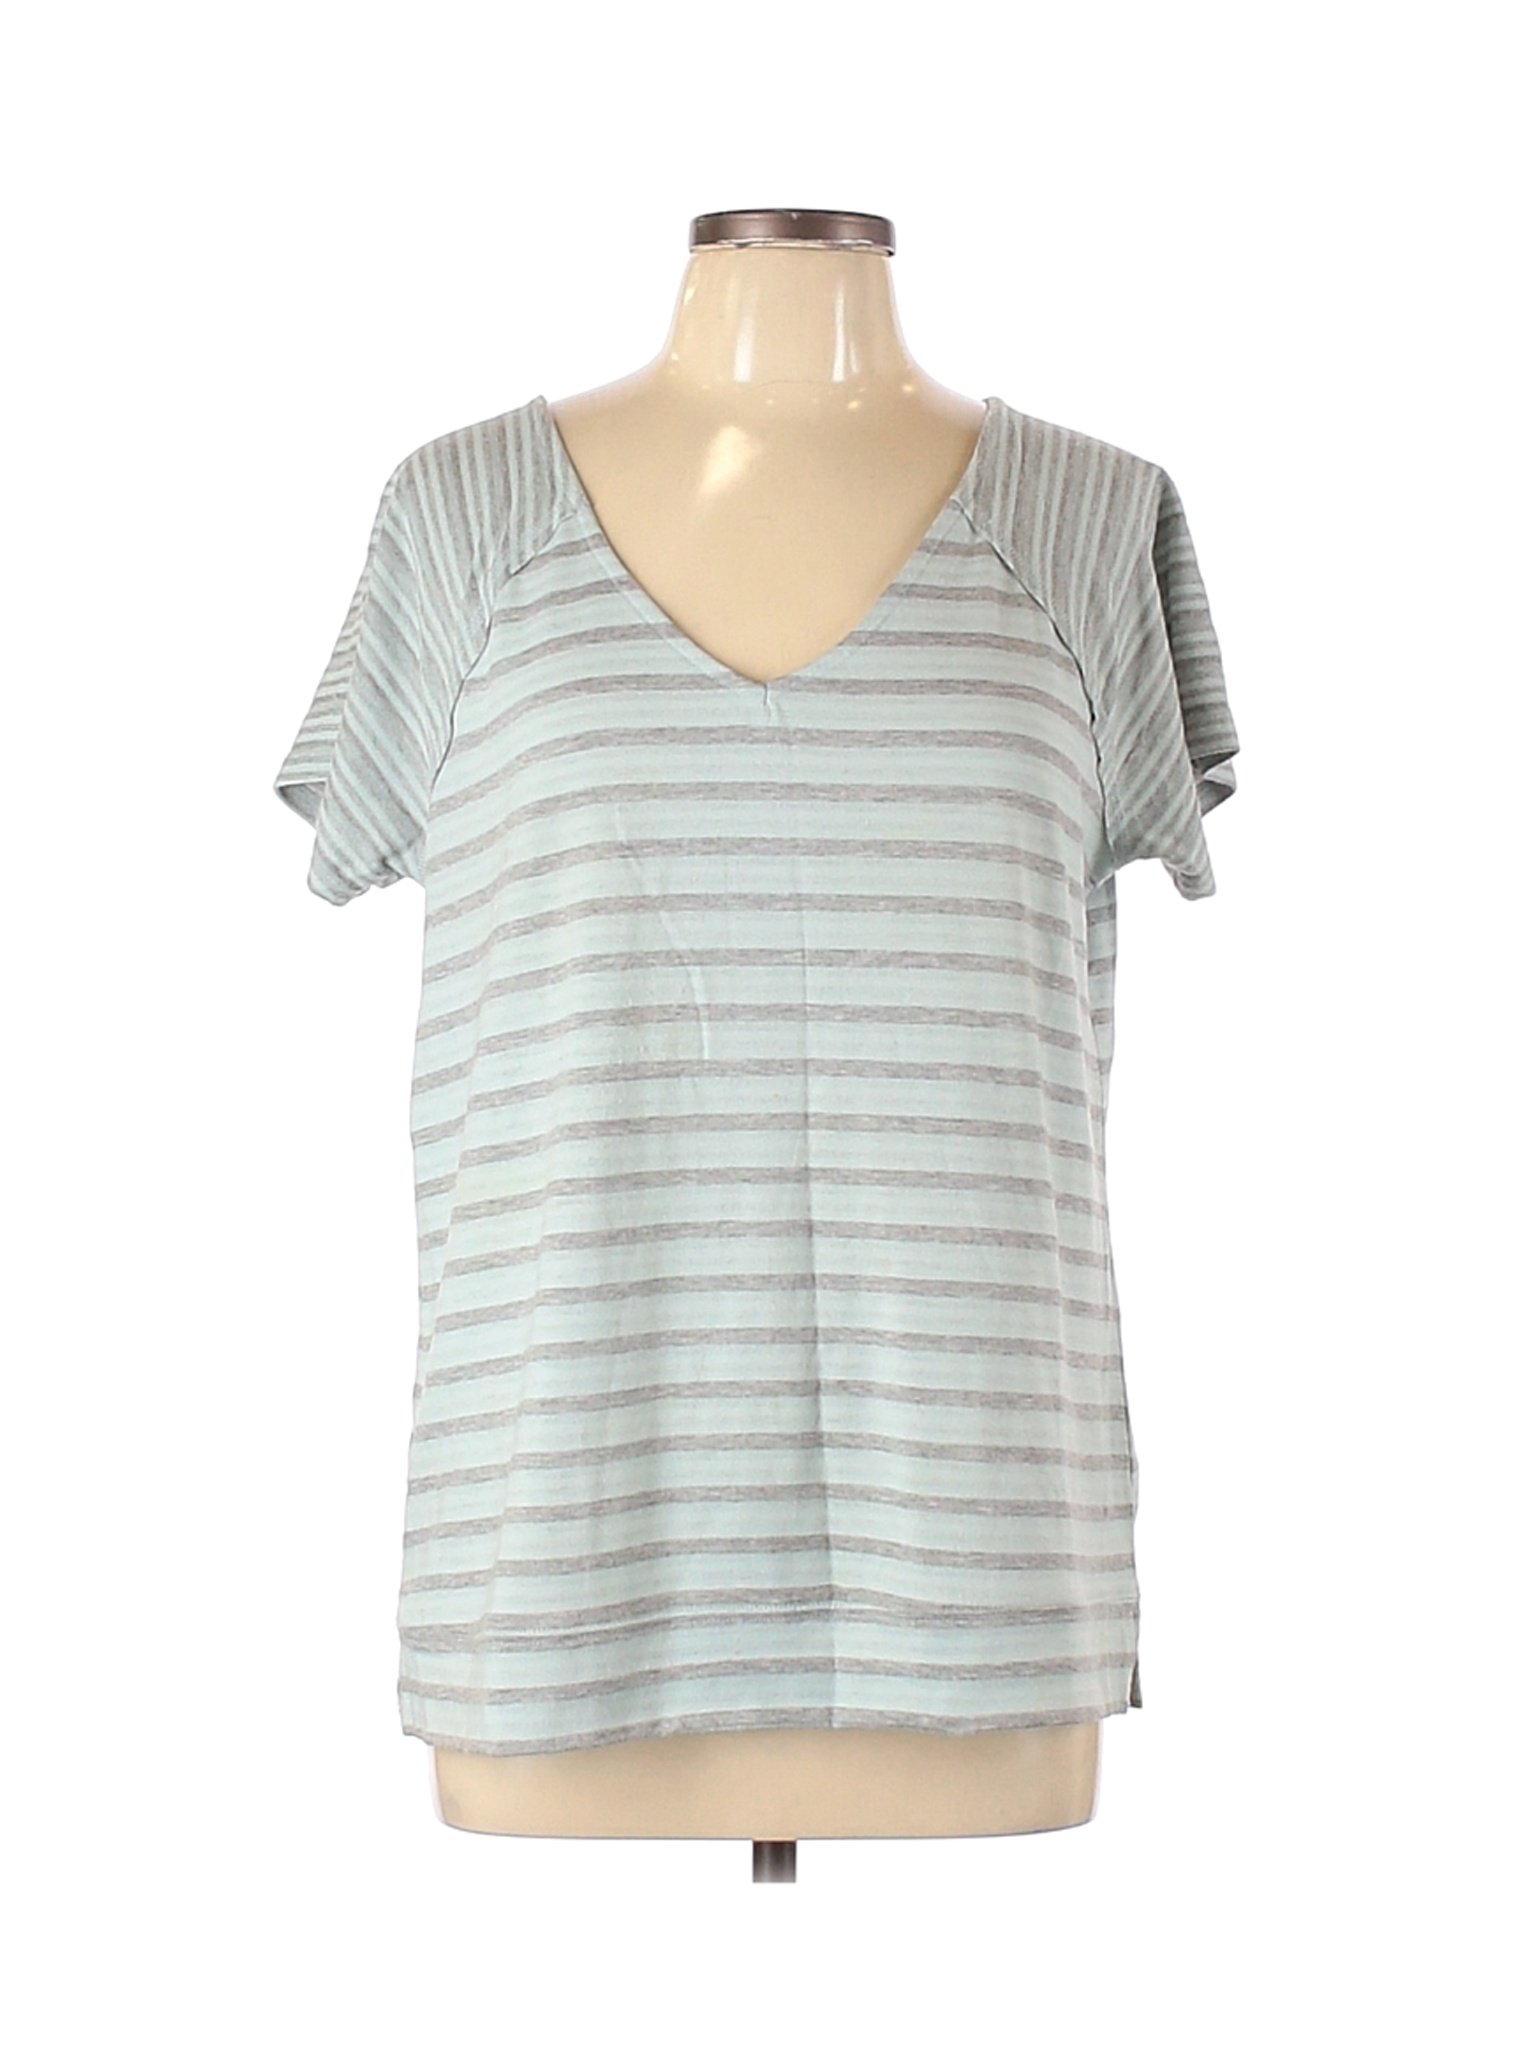 Maurices Women Gray Short Sleeve T-Shirt L | eBay